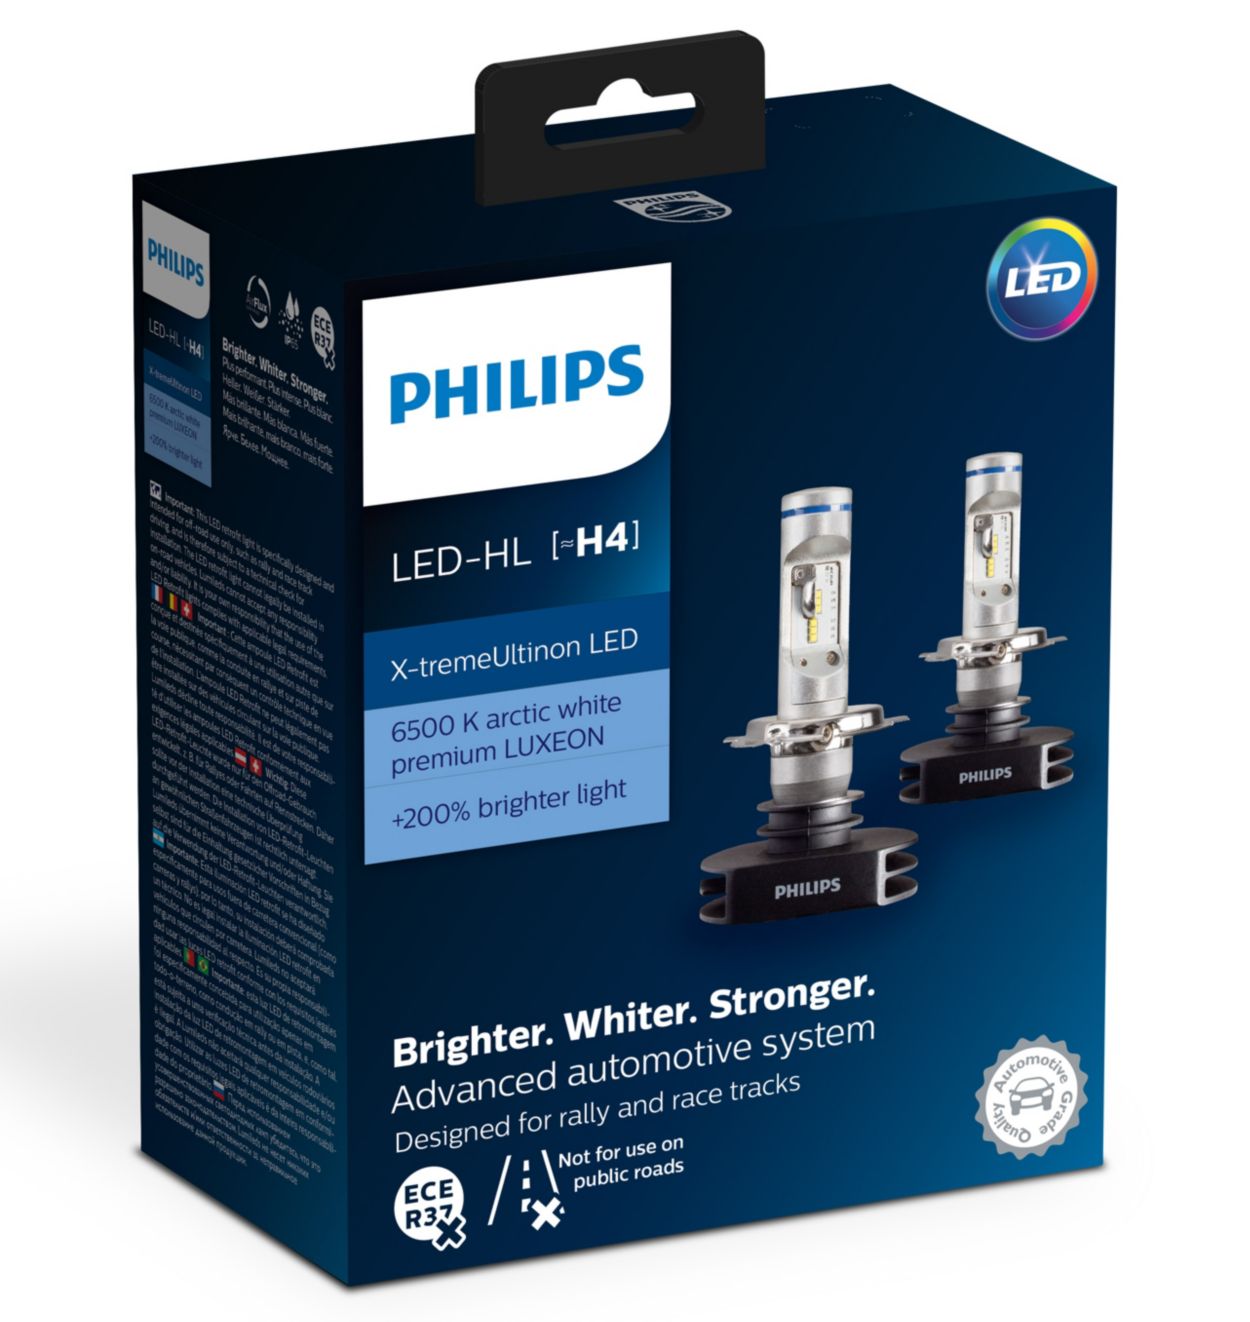 Philips X-treme Ultinon LED Bulb Kit - High Performance Lighting